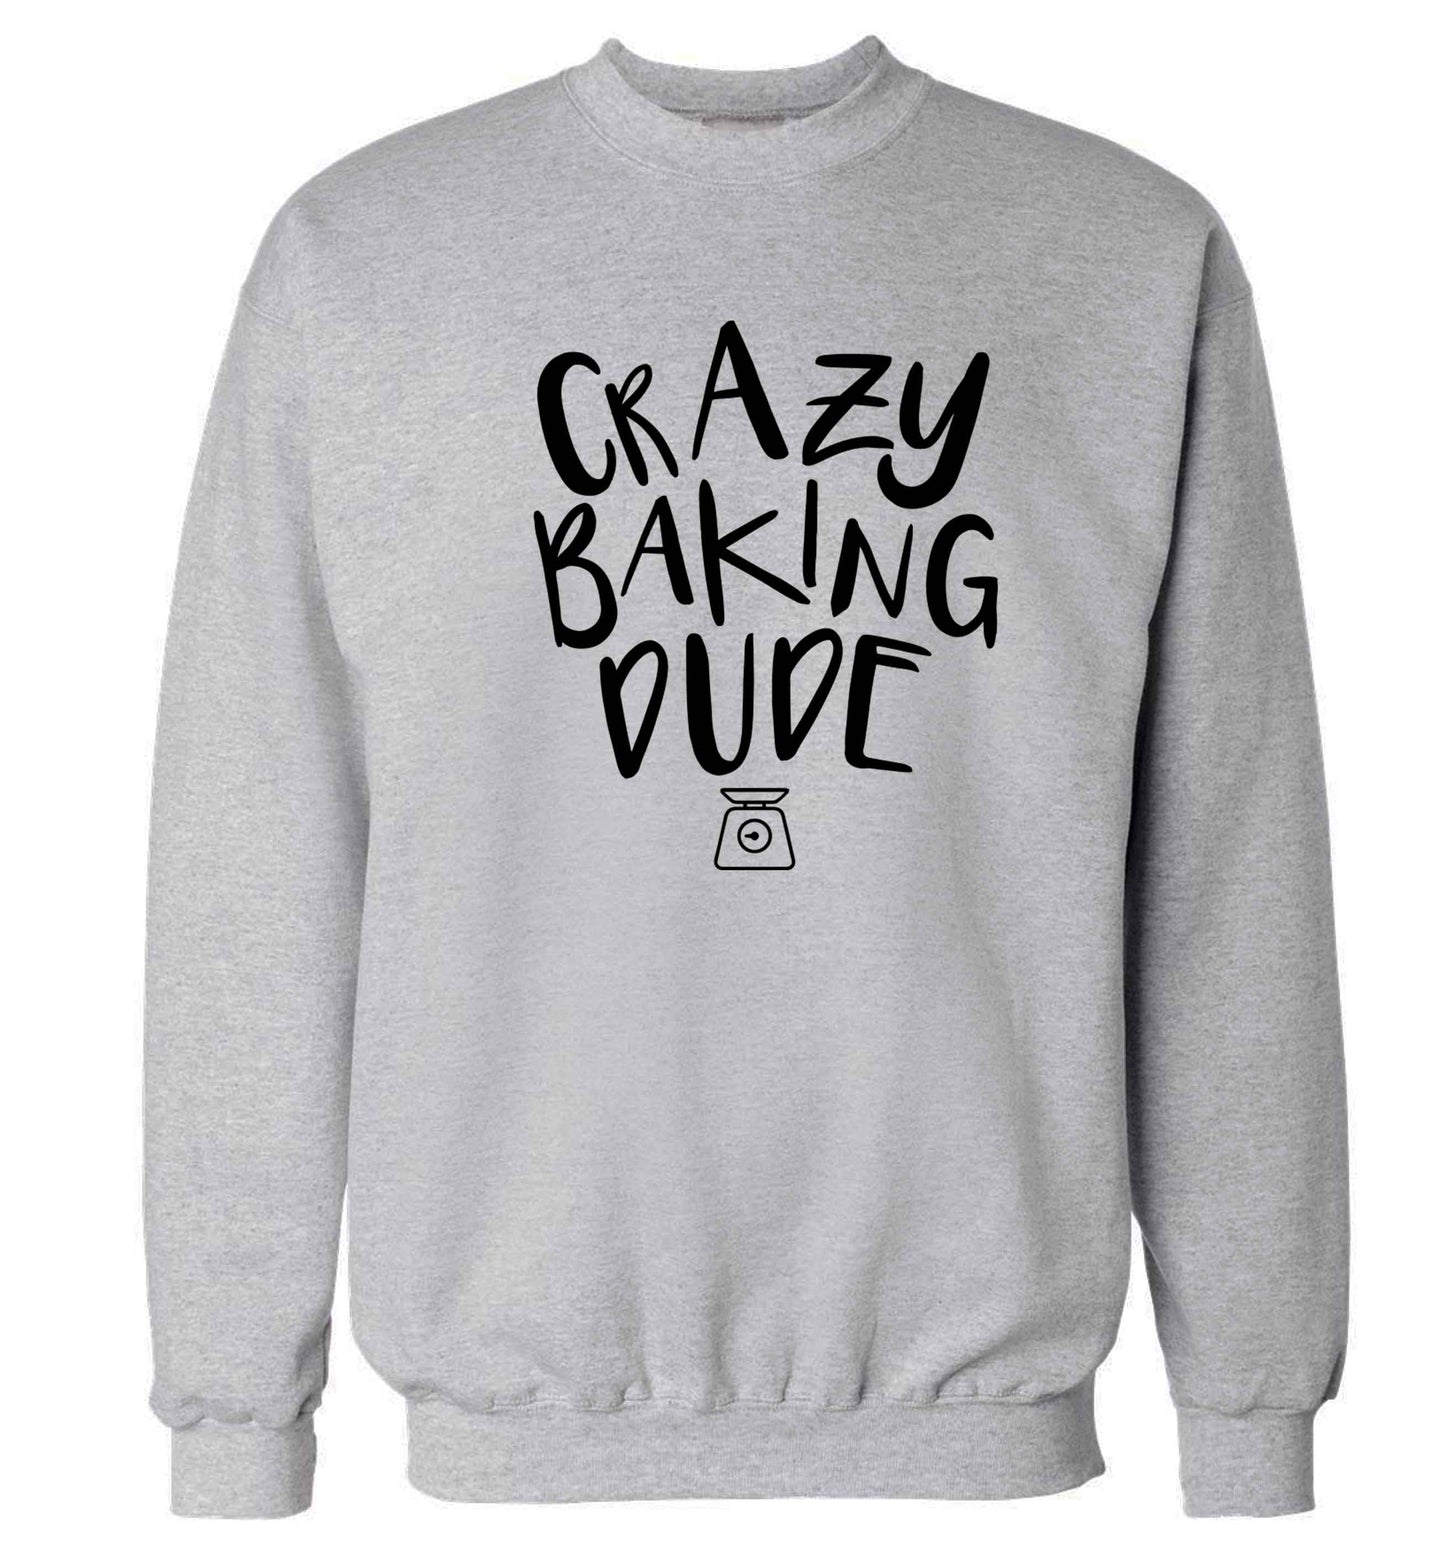 Crazy baking dude Adult's unisex grey Sweater 2XL